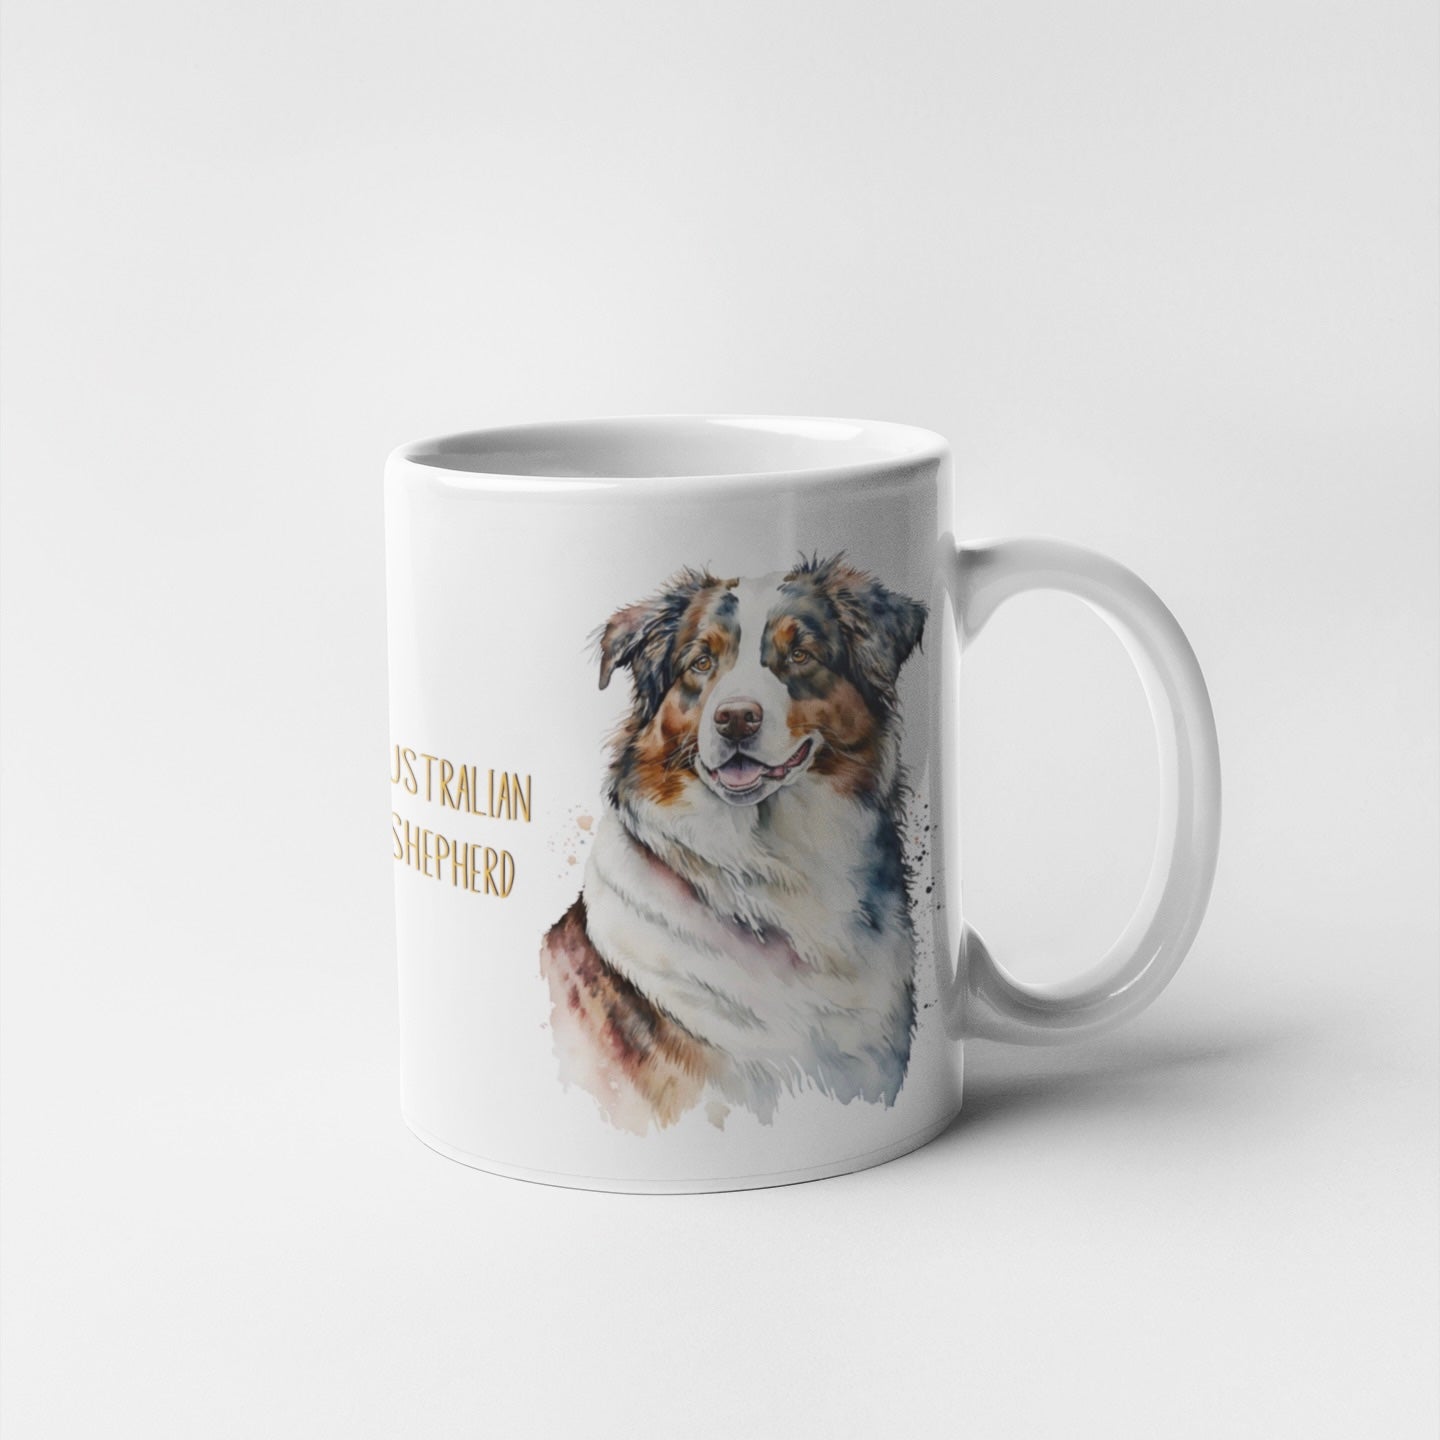 Australian Shepherd Dogs Collection Art Personalised Ceramic Mug Gift Idea